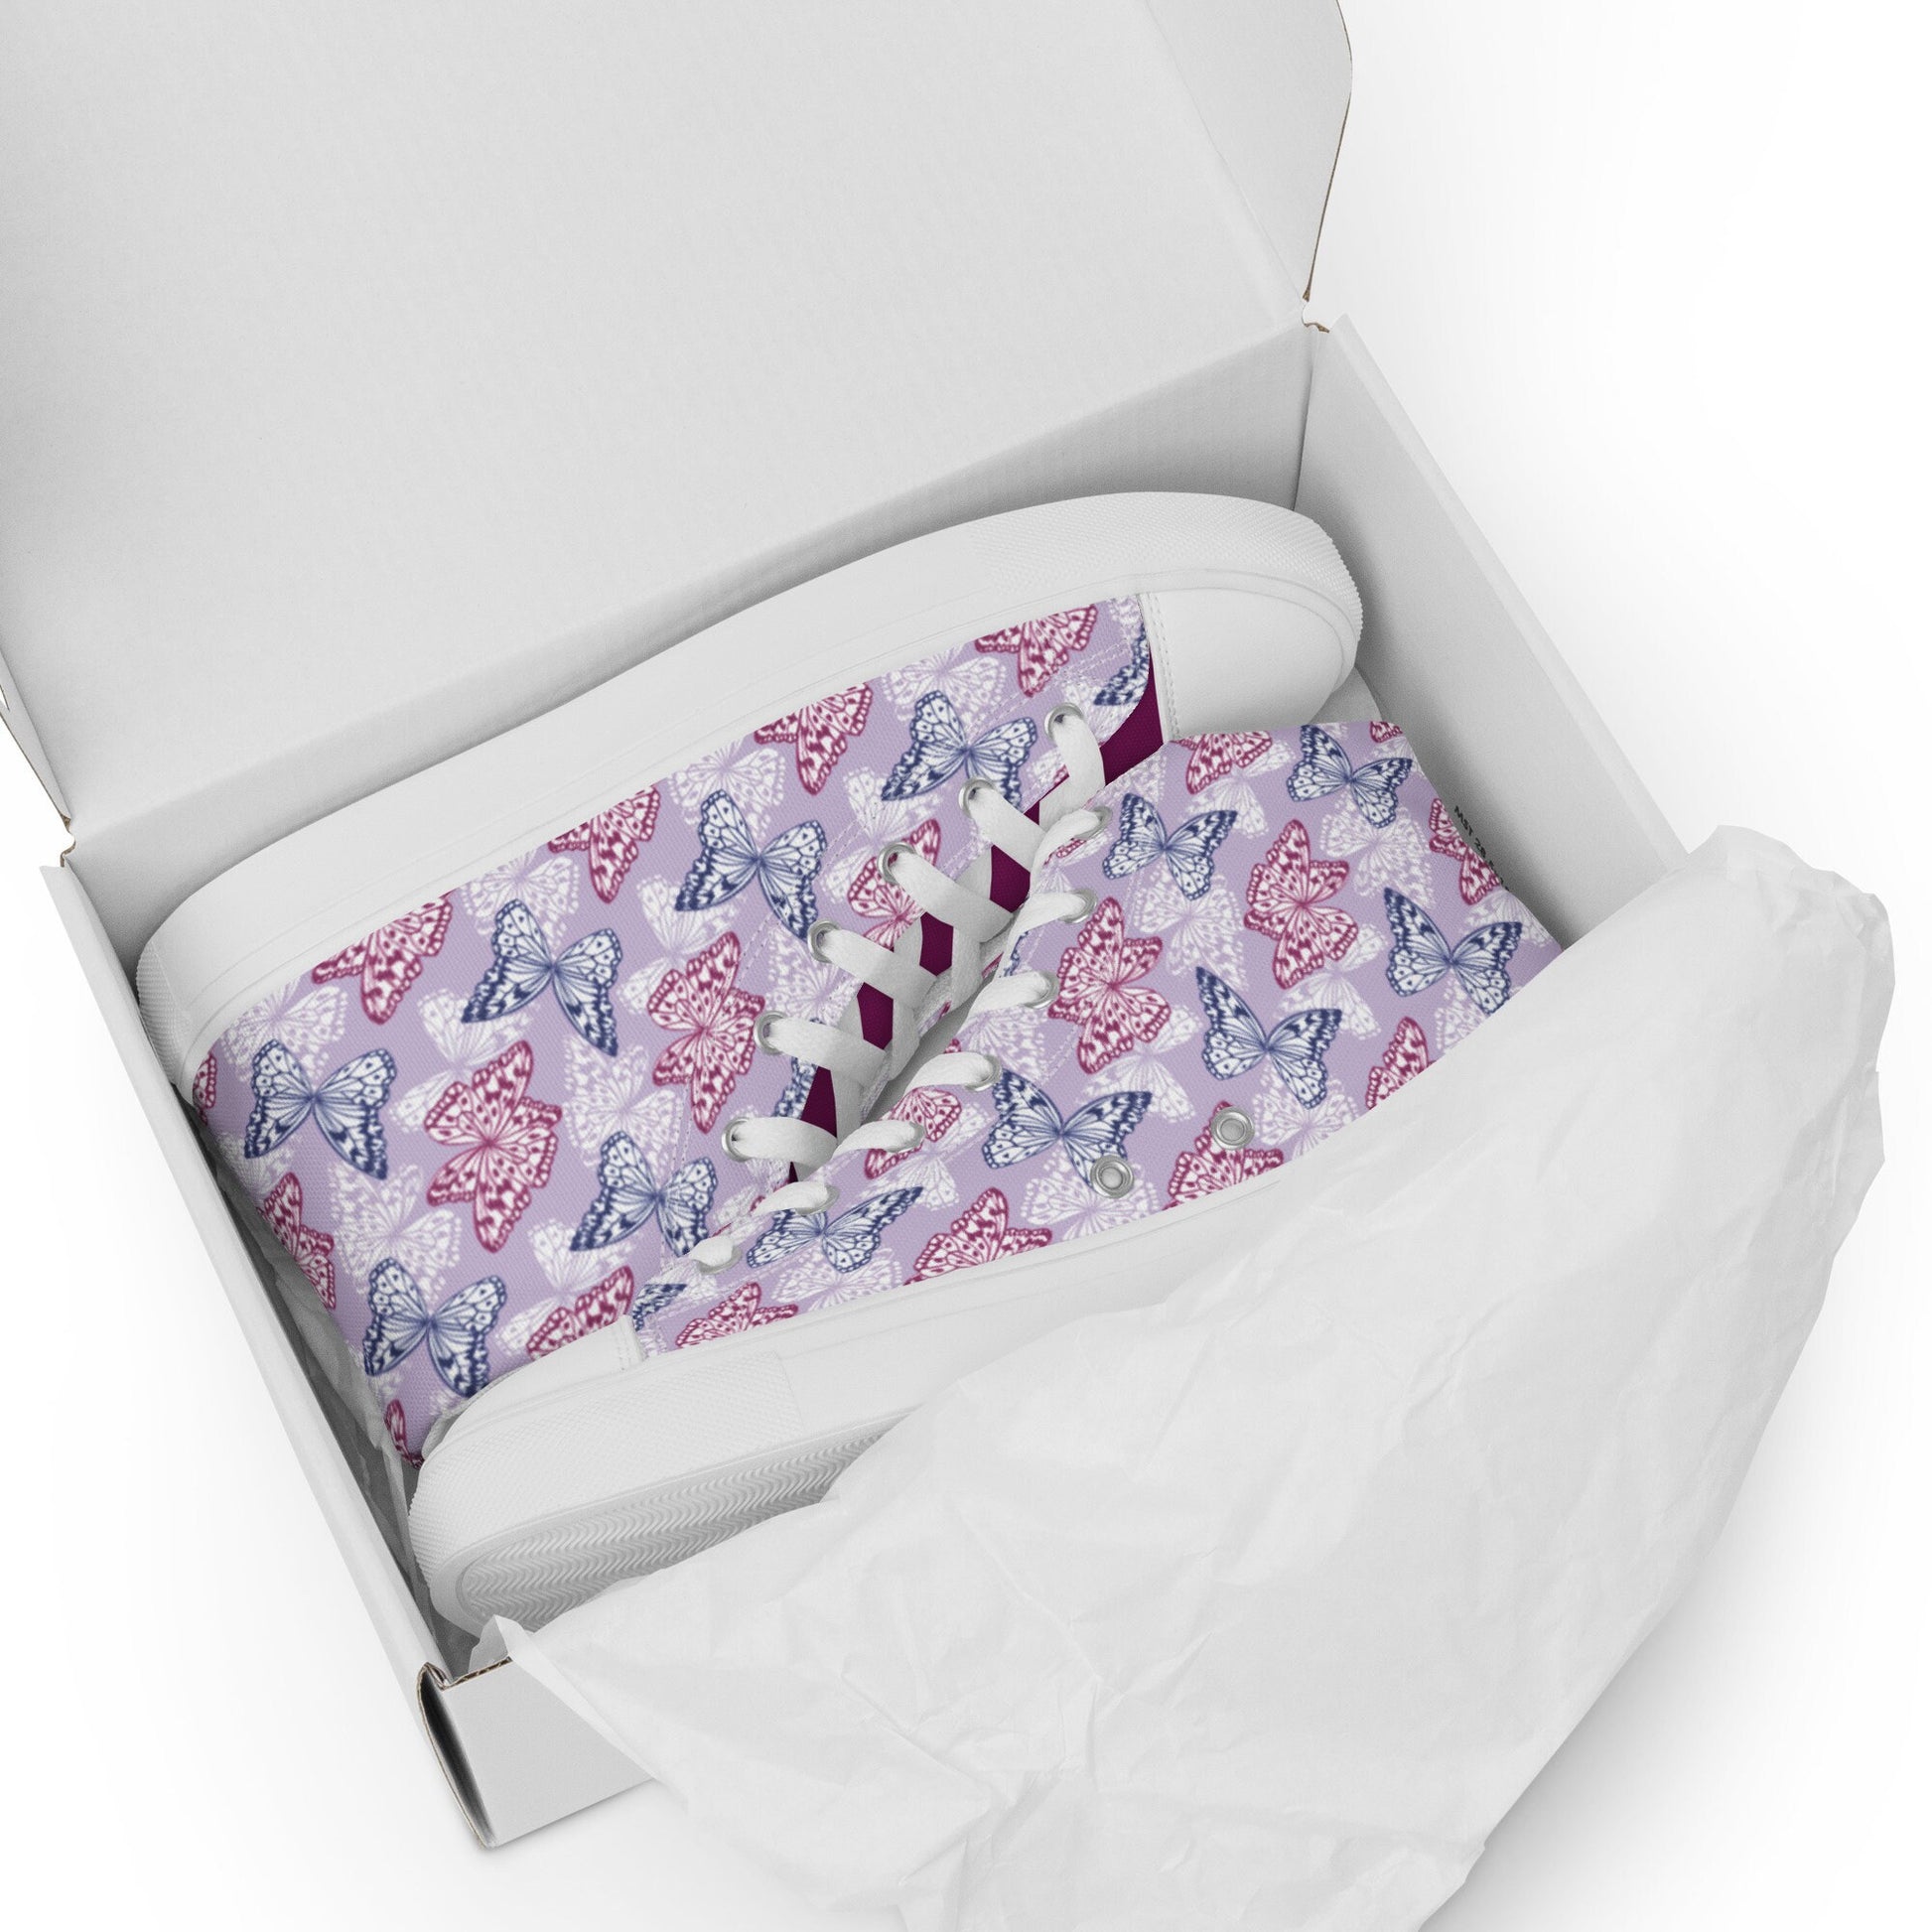 Butterflies/Eggplant Women’s high top canvas shoes - 4RLives